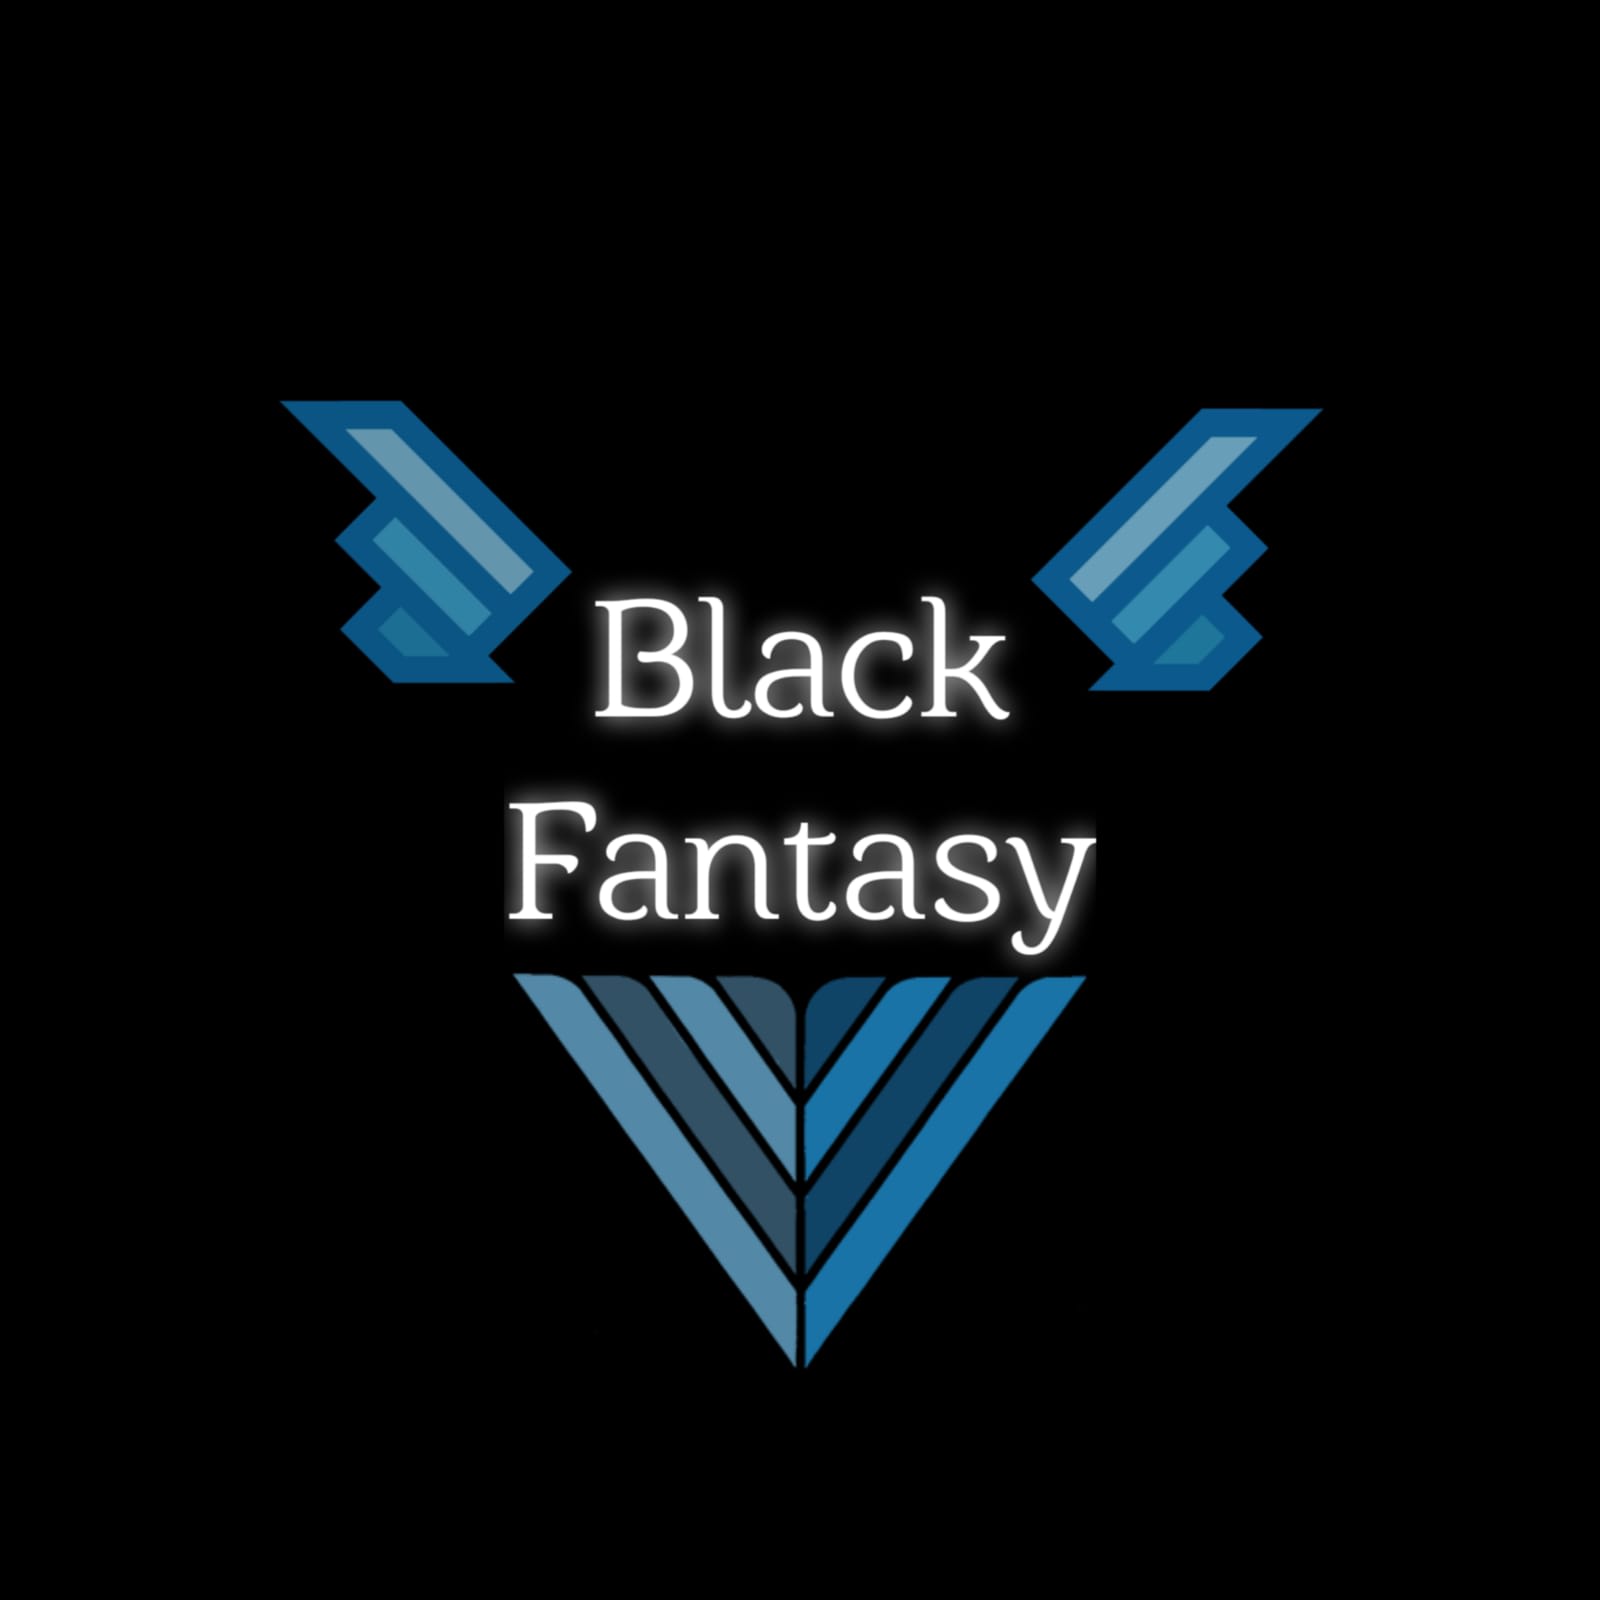 Black Fantasy